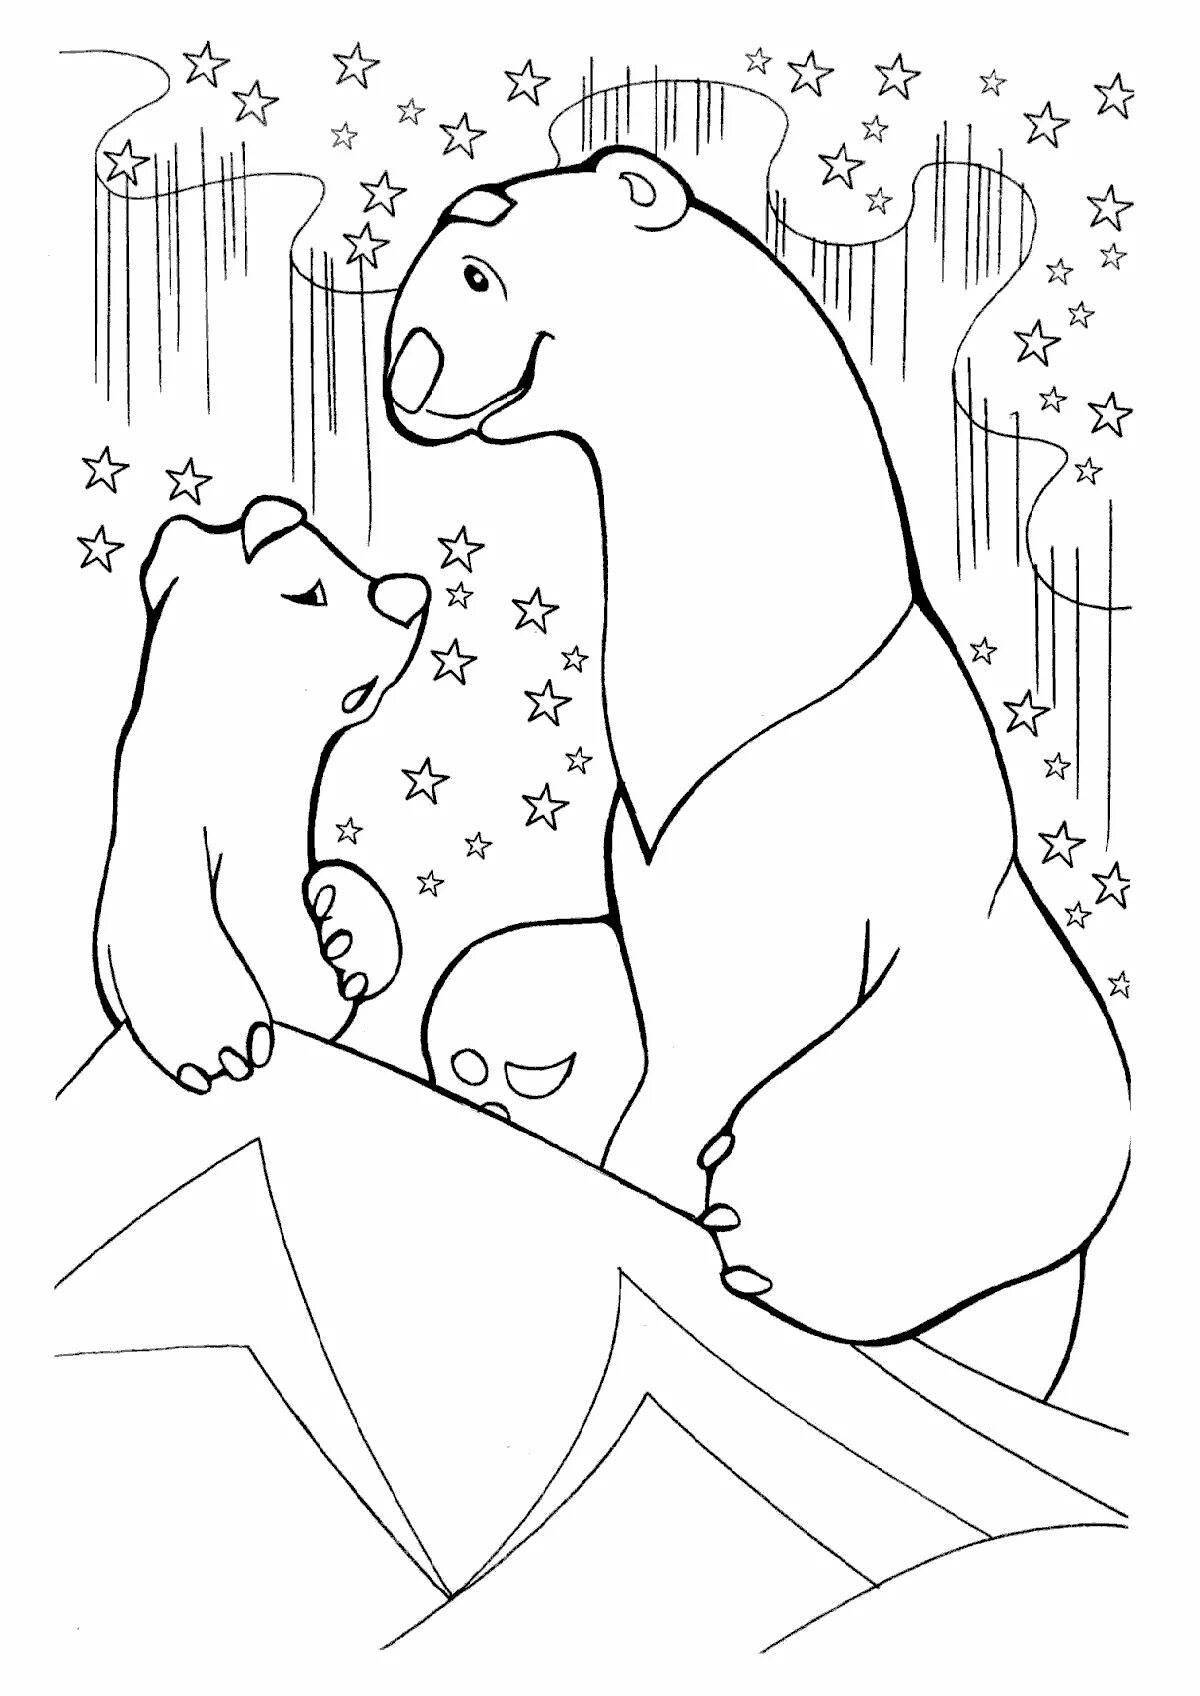 Children's white bear coloring book